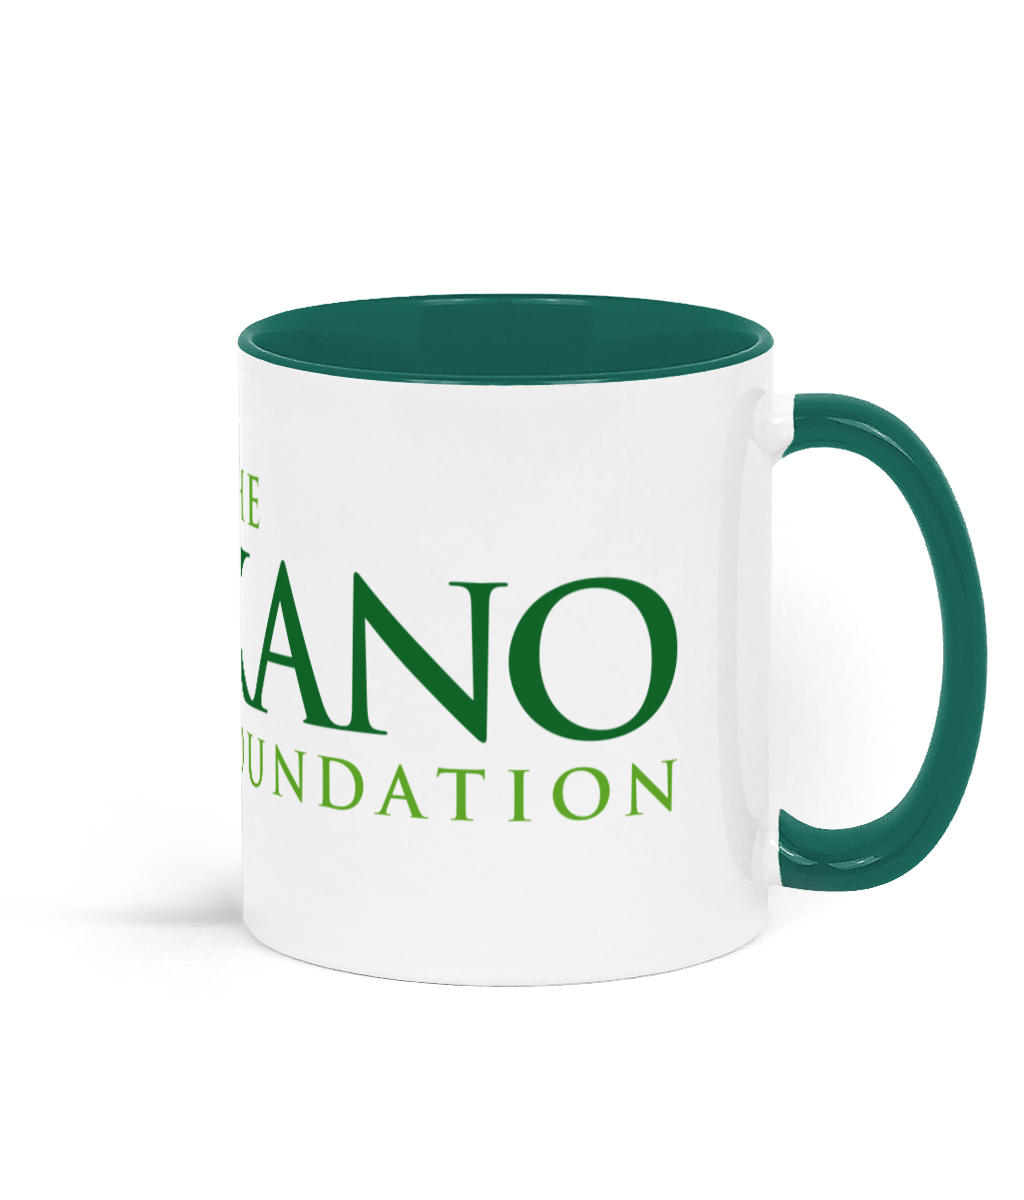 New Two Toned Ceramic Mug The Kano Foundation Mug